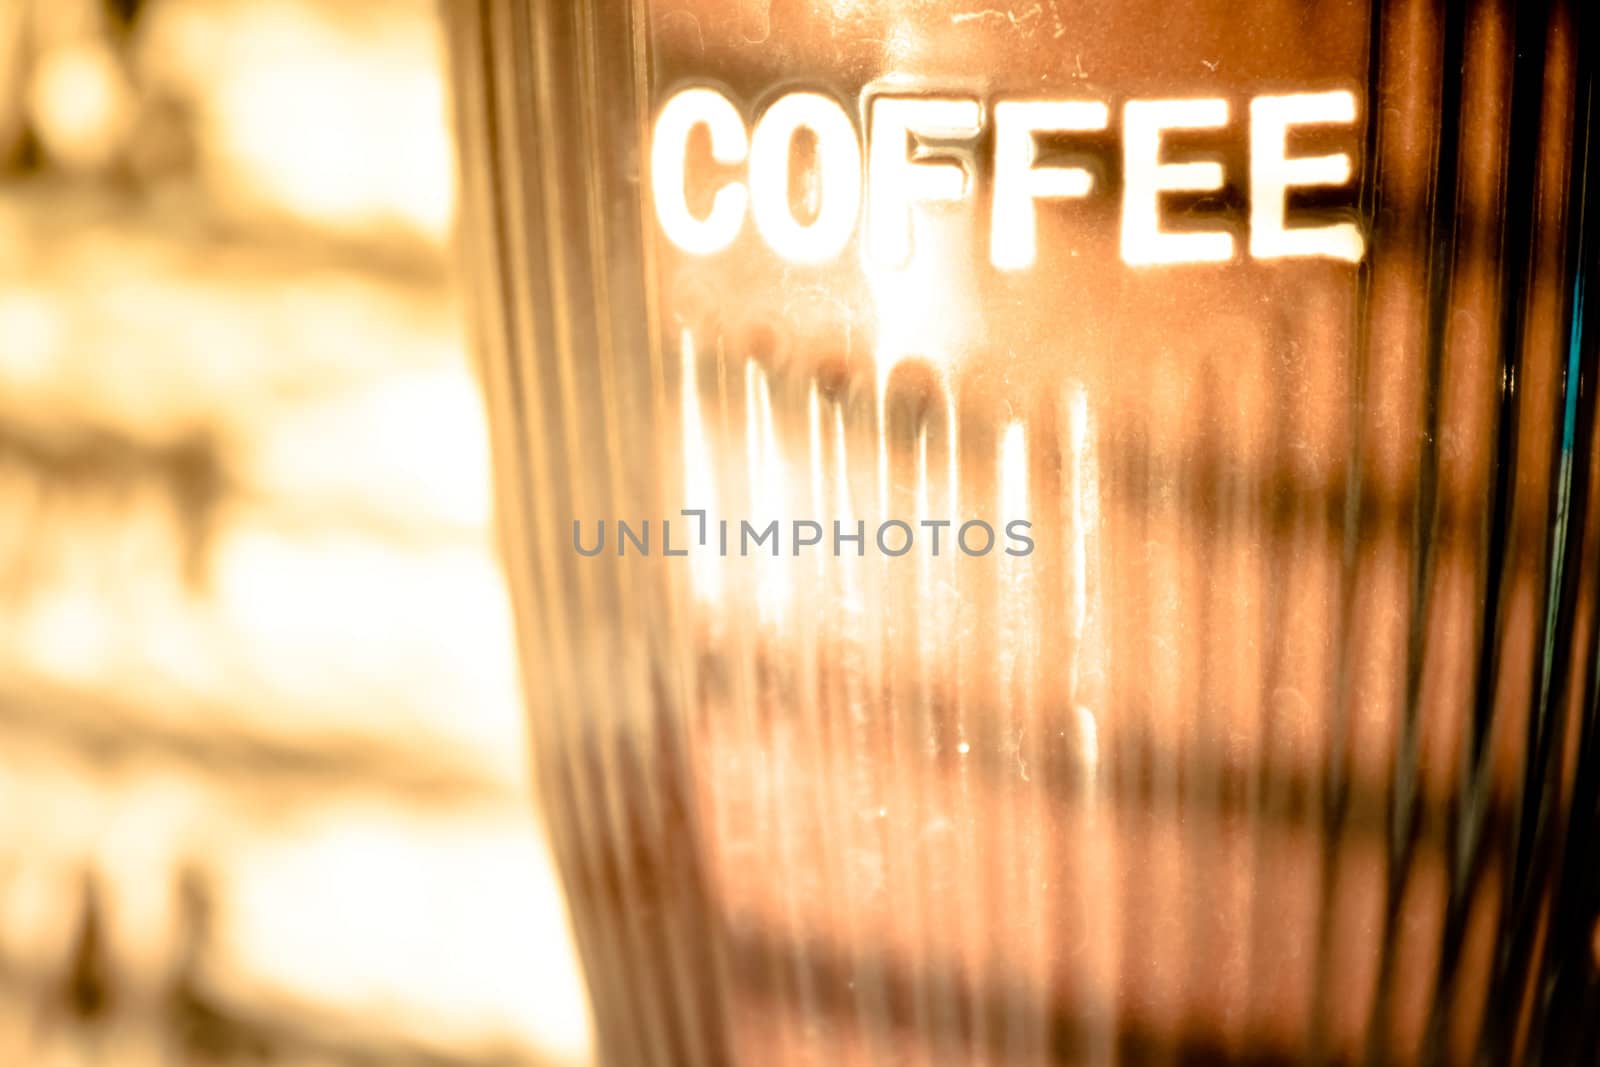 close up photo of coffee mug and window blinds reflection